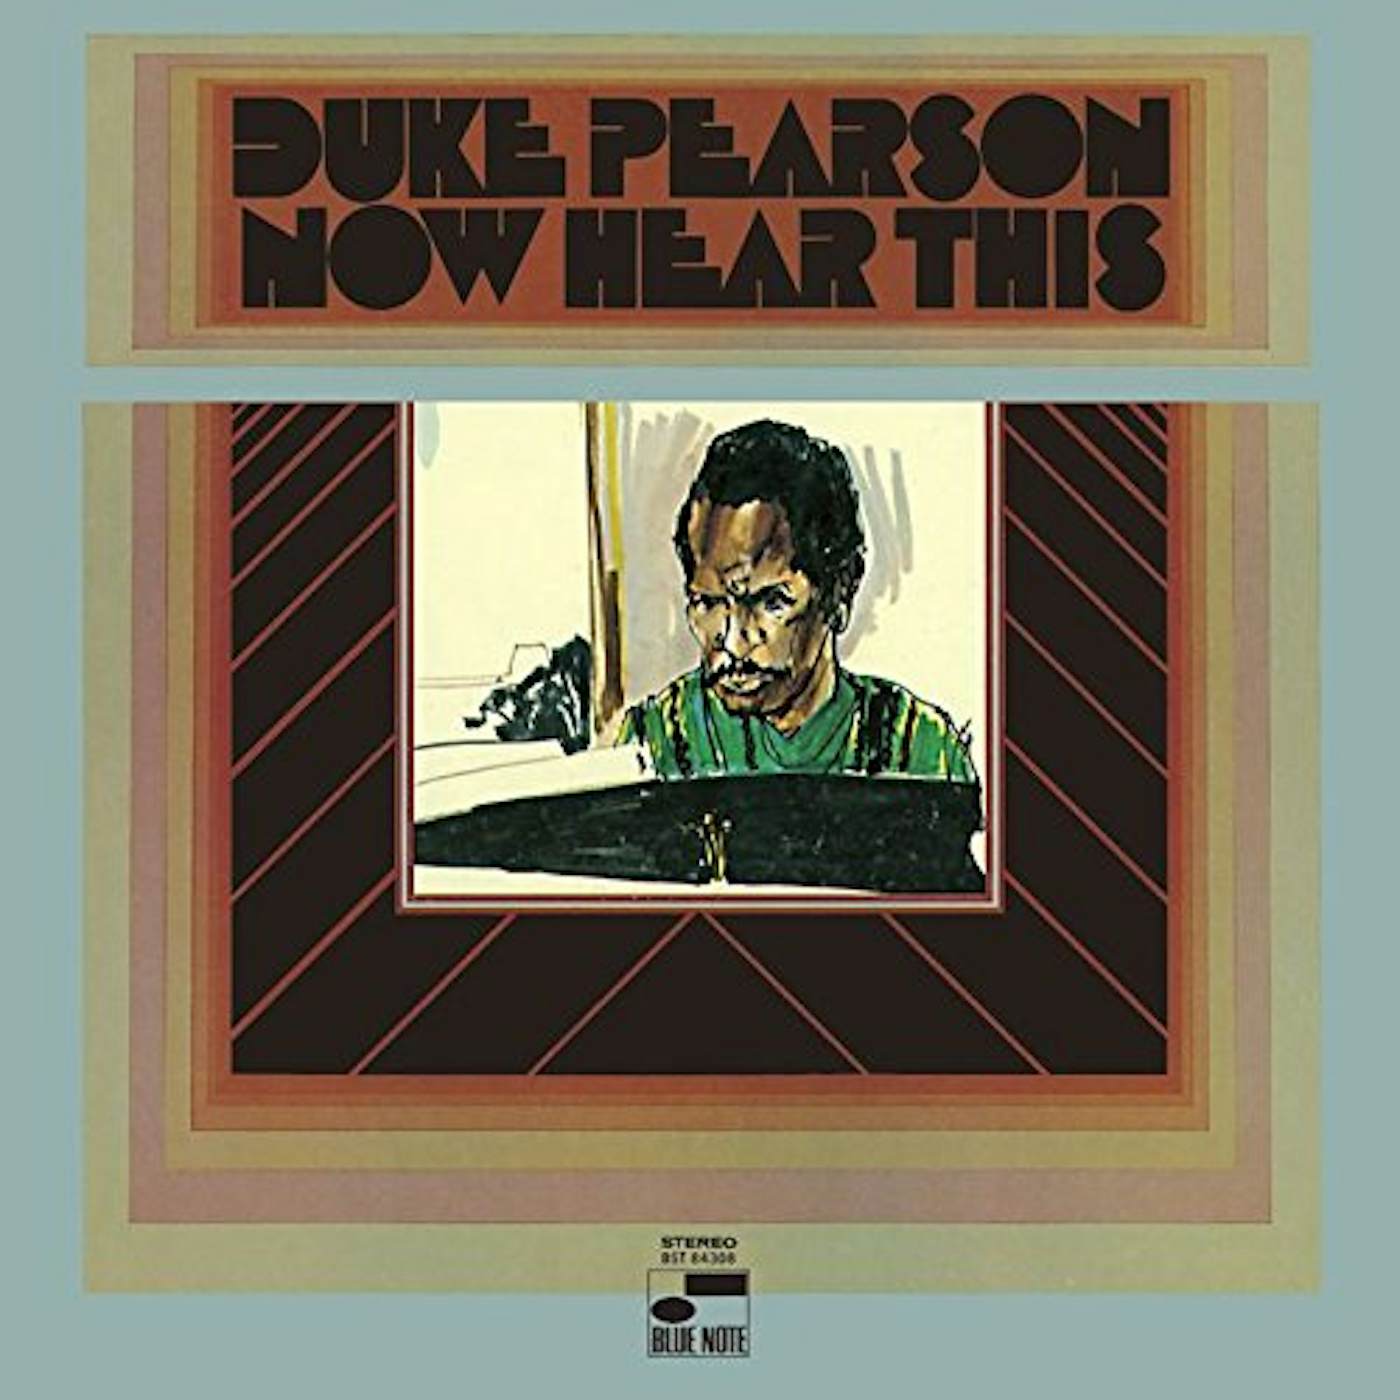 Duke Pearson NOW HERE THIS CD